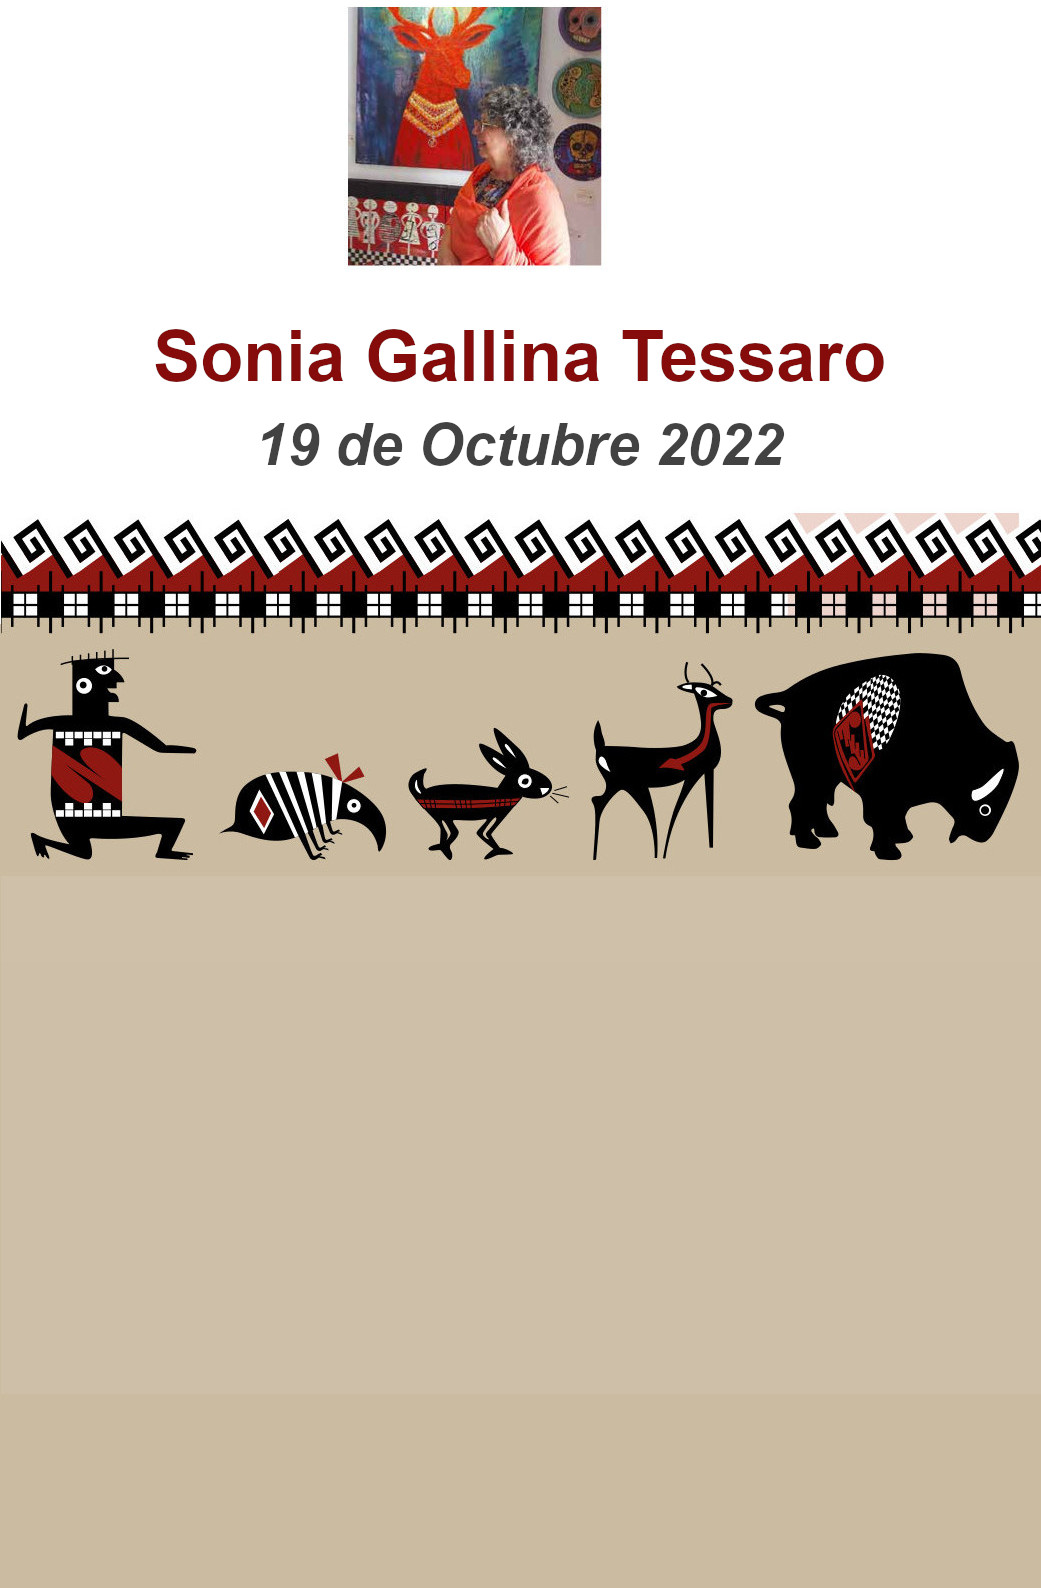 Sonia Gallina Tessaro